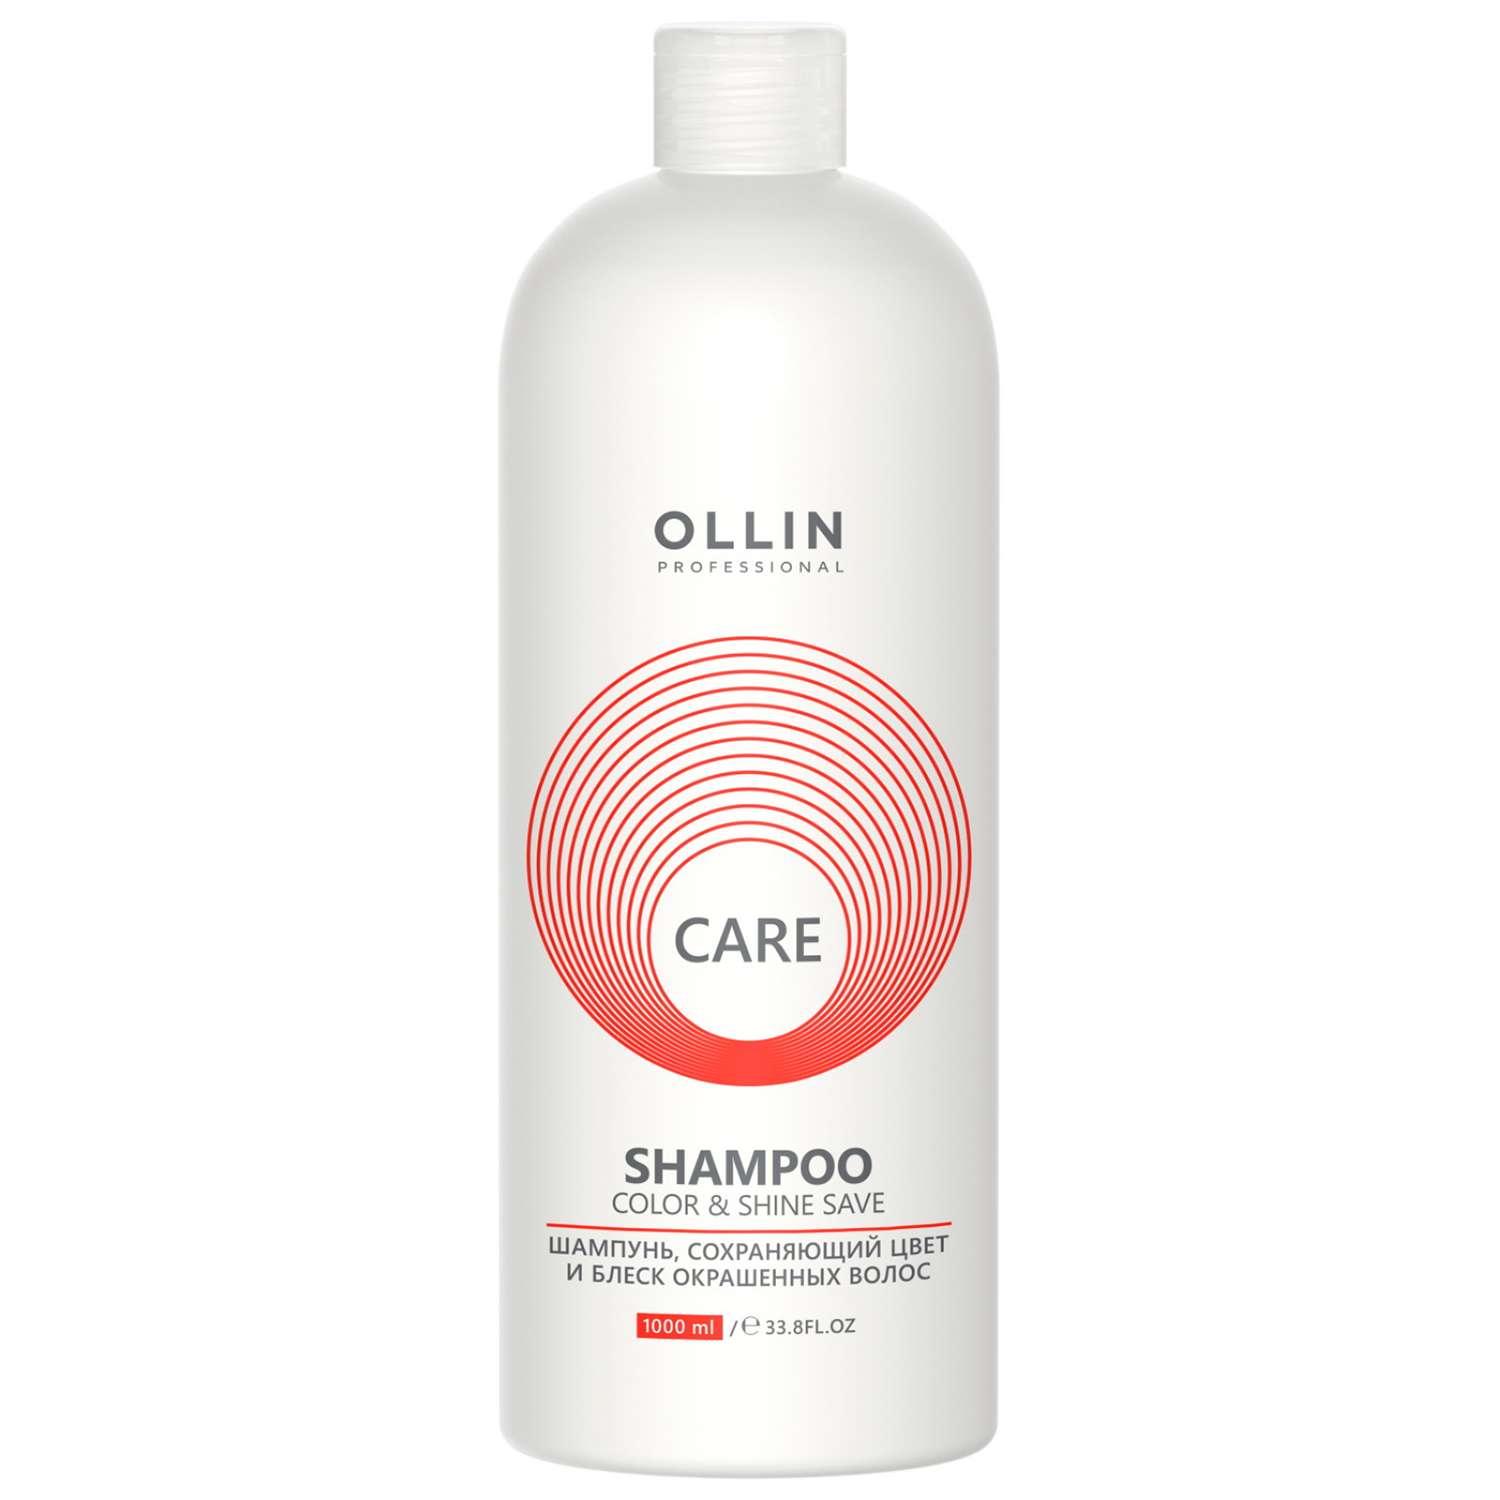 Шампунь Ollin care для окрашенных волос color and shine save 1000 мл - фото 1